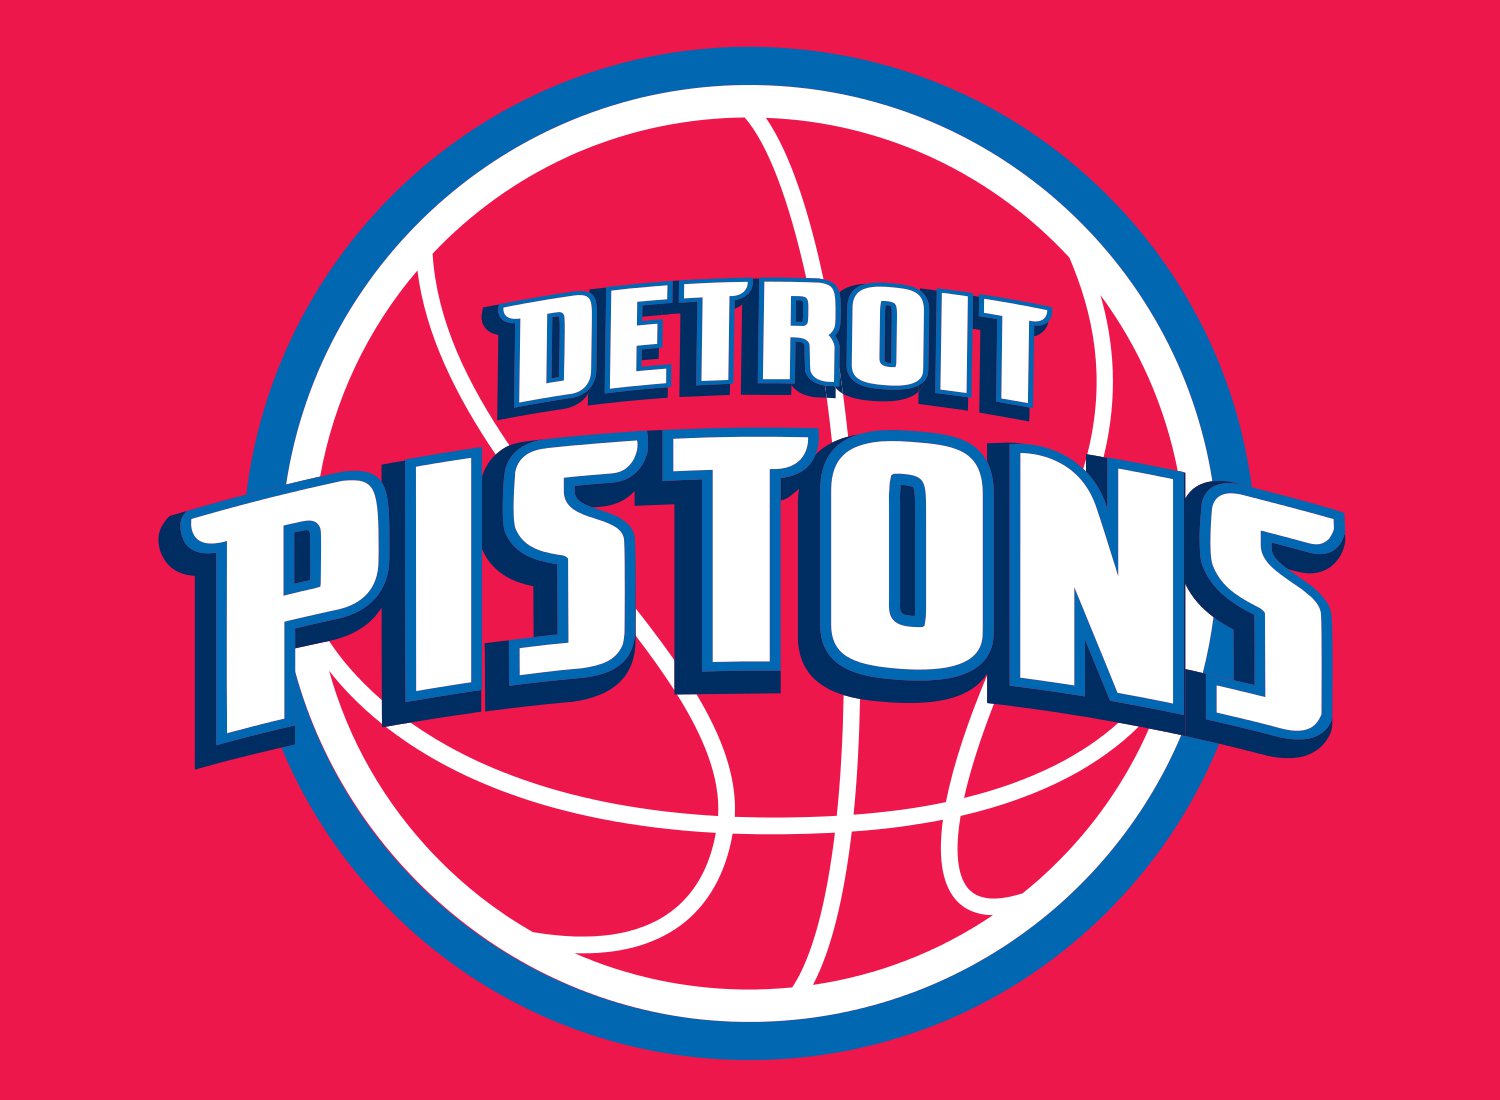 Detroit pistons. Пистонс лого. Detroit Pistons logo. Детройт логотип НБА. Детройт Пистонс команда фотосессии.